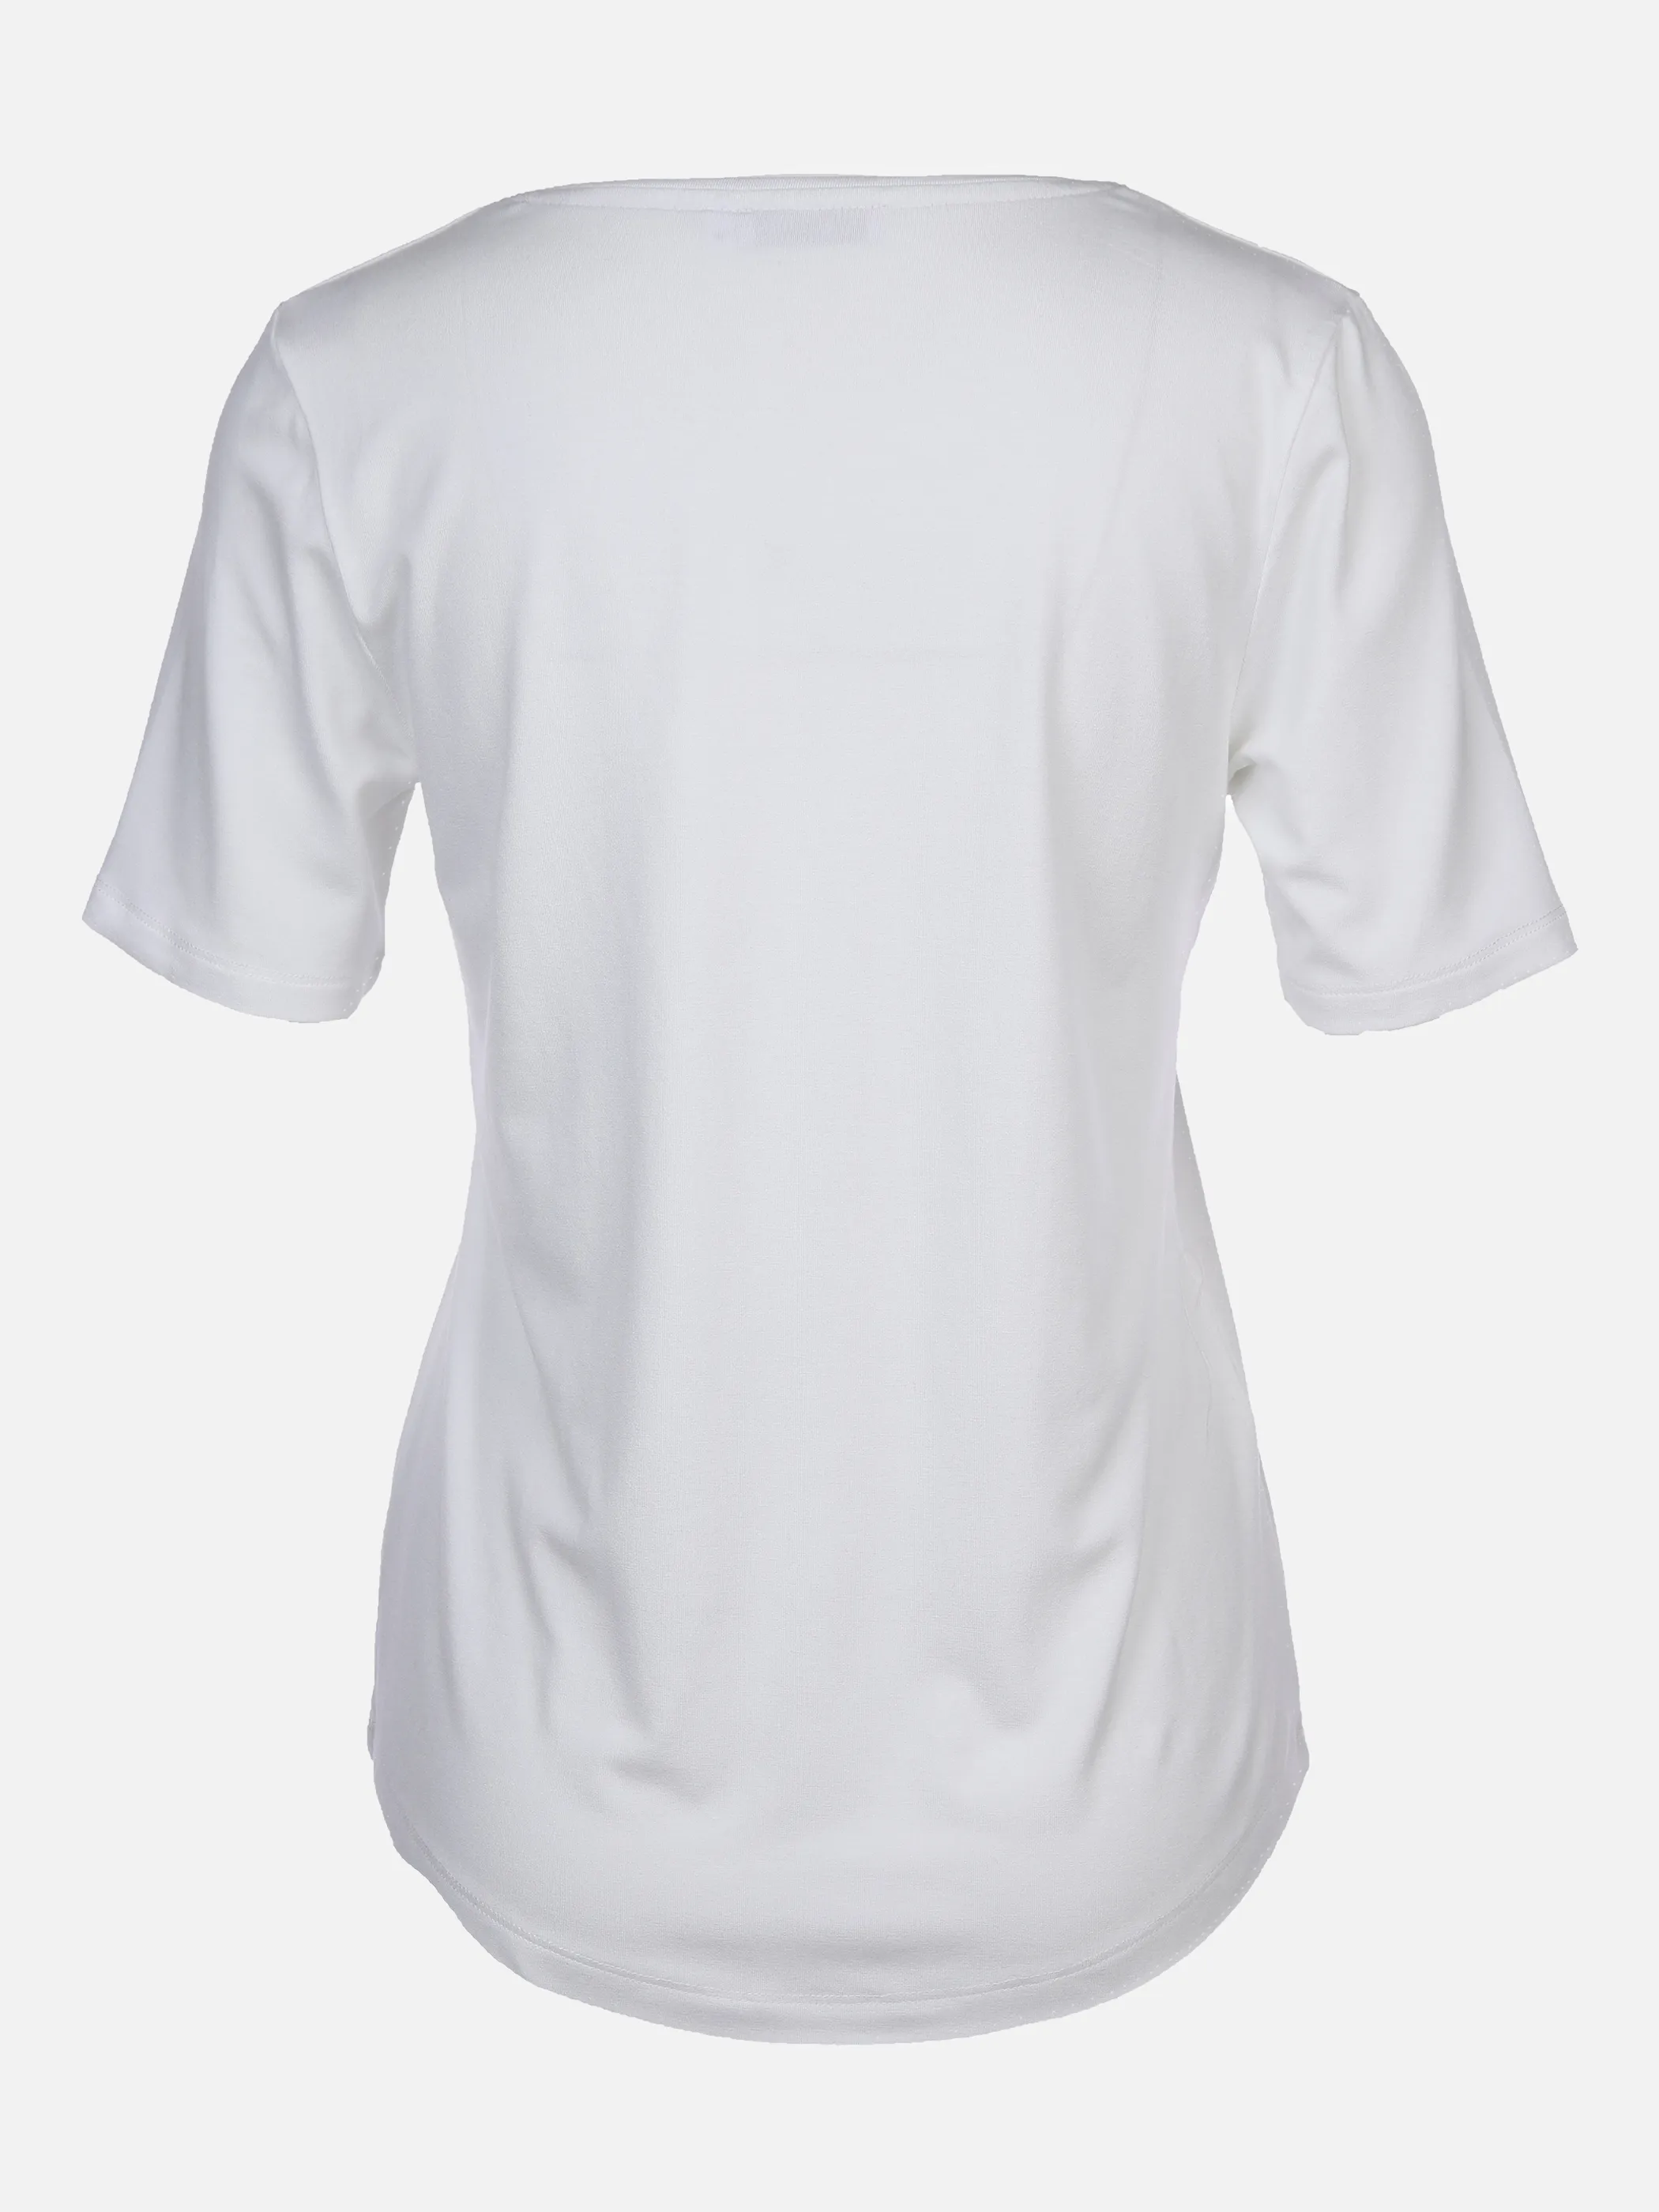 Lisa Tossa Da-T-Shirt mit Folienprint Weiß 877570 OFFWHITE 2